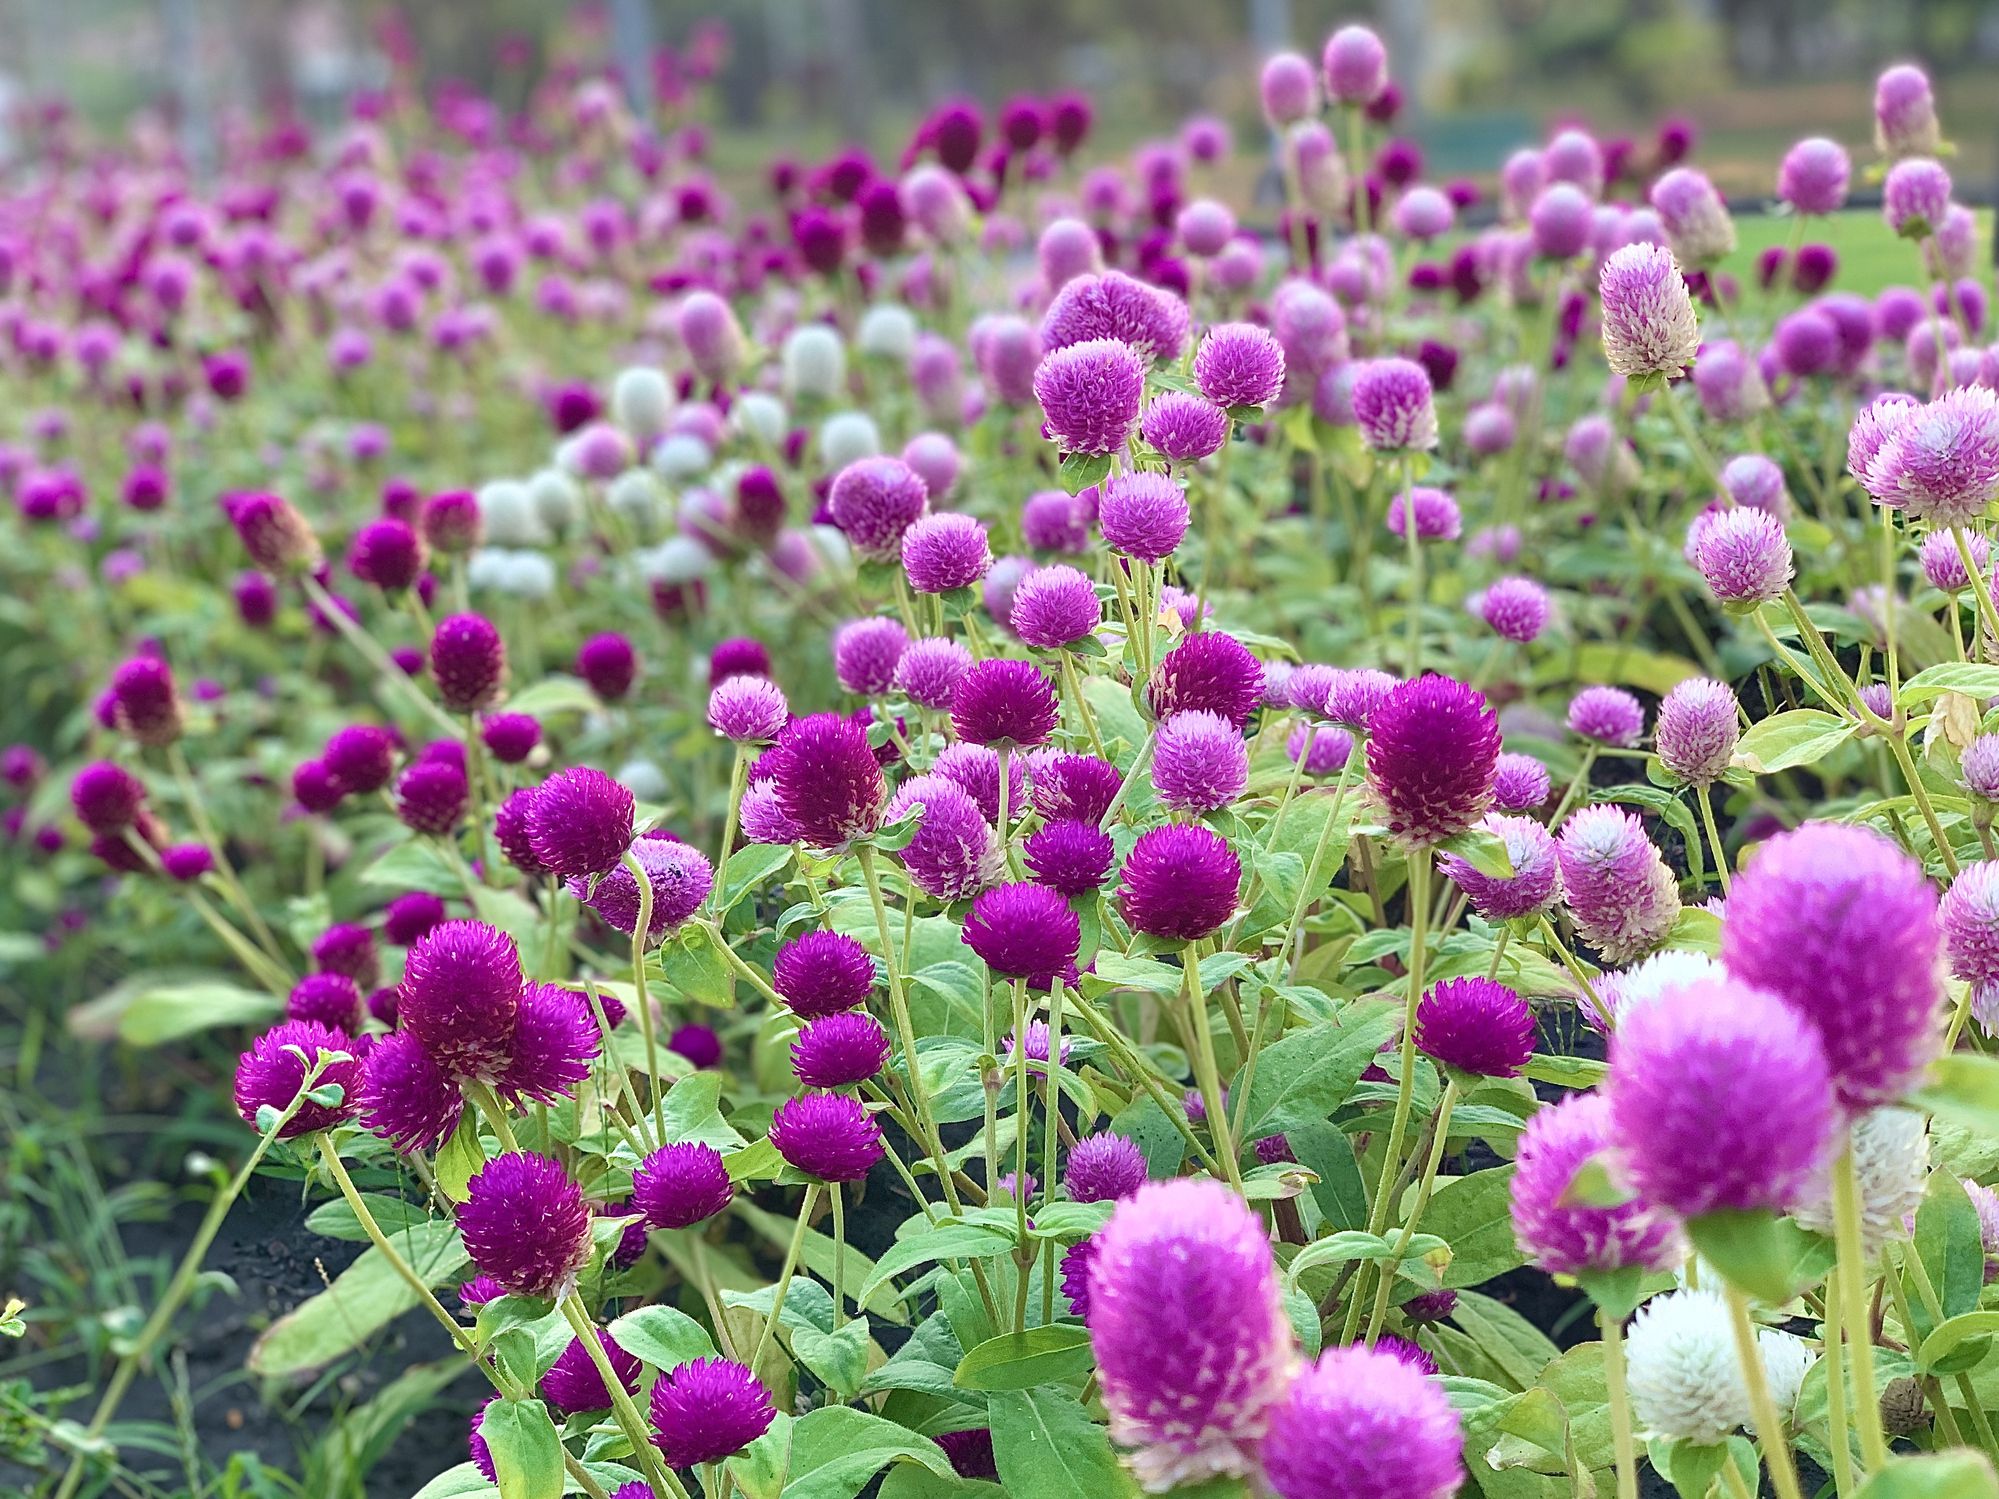 World's Best Purple Delicate Flowers - New Super Popular Leggings